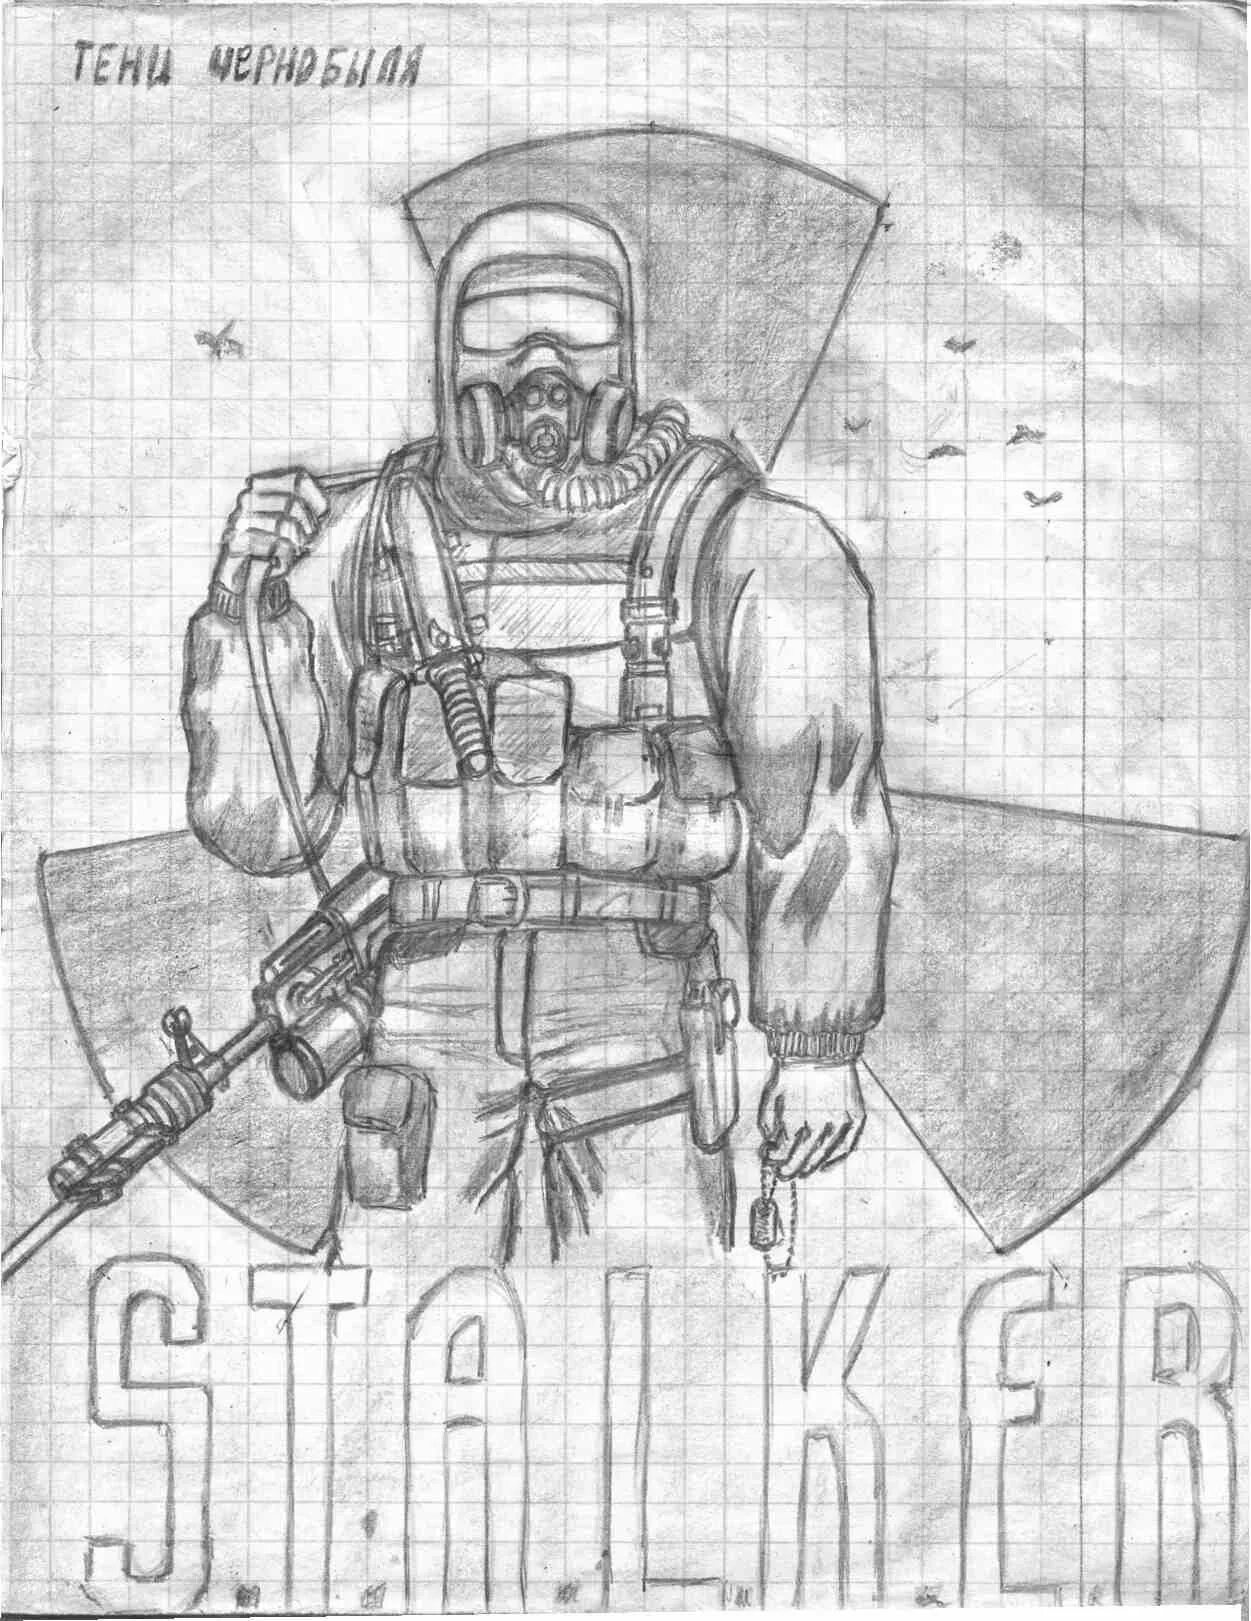 Stalker clear sky #2